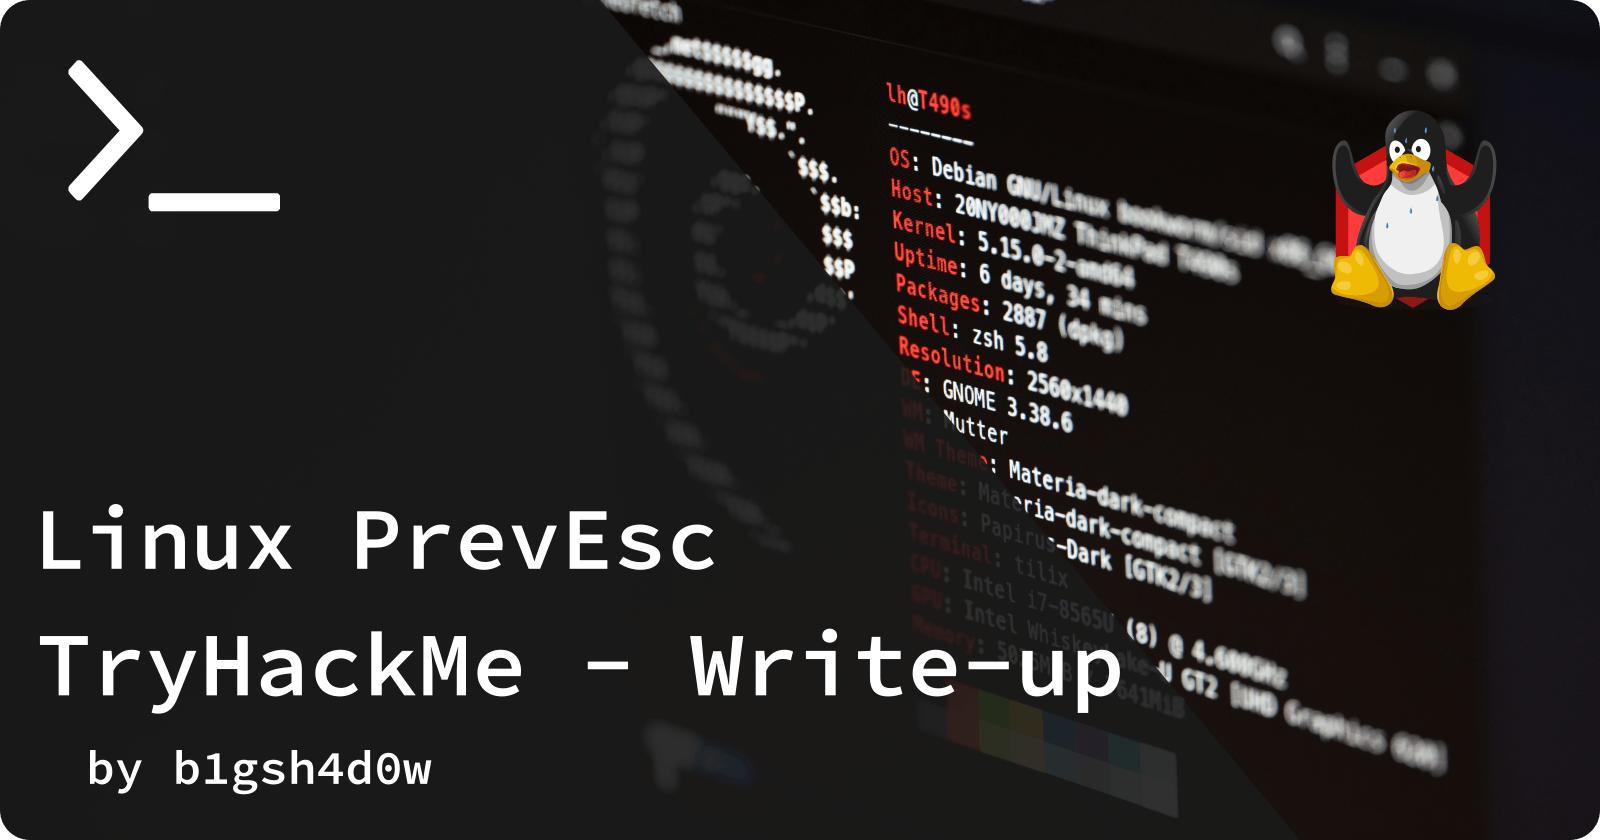 Linux PrivEsc - TryHackMe Write-up